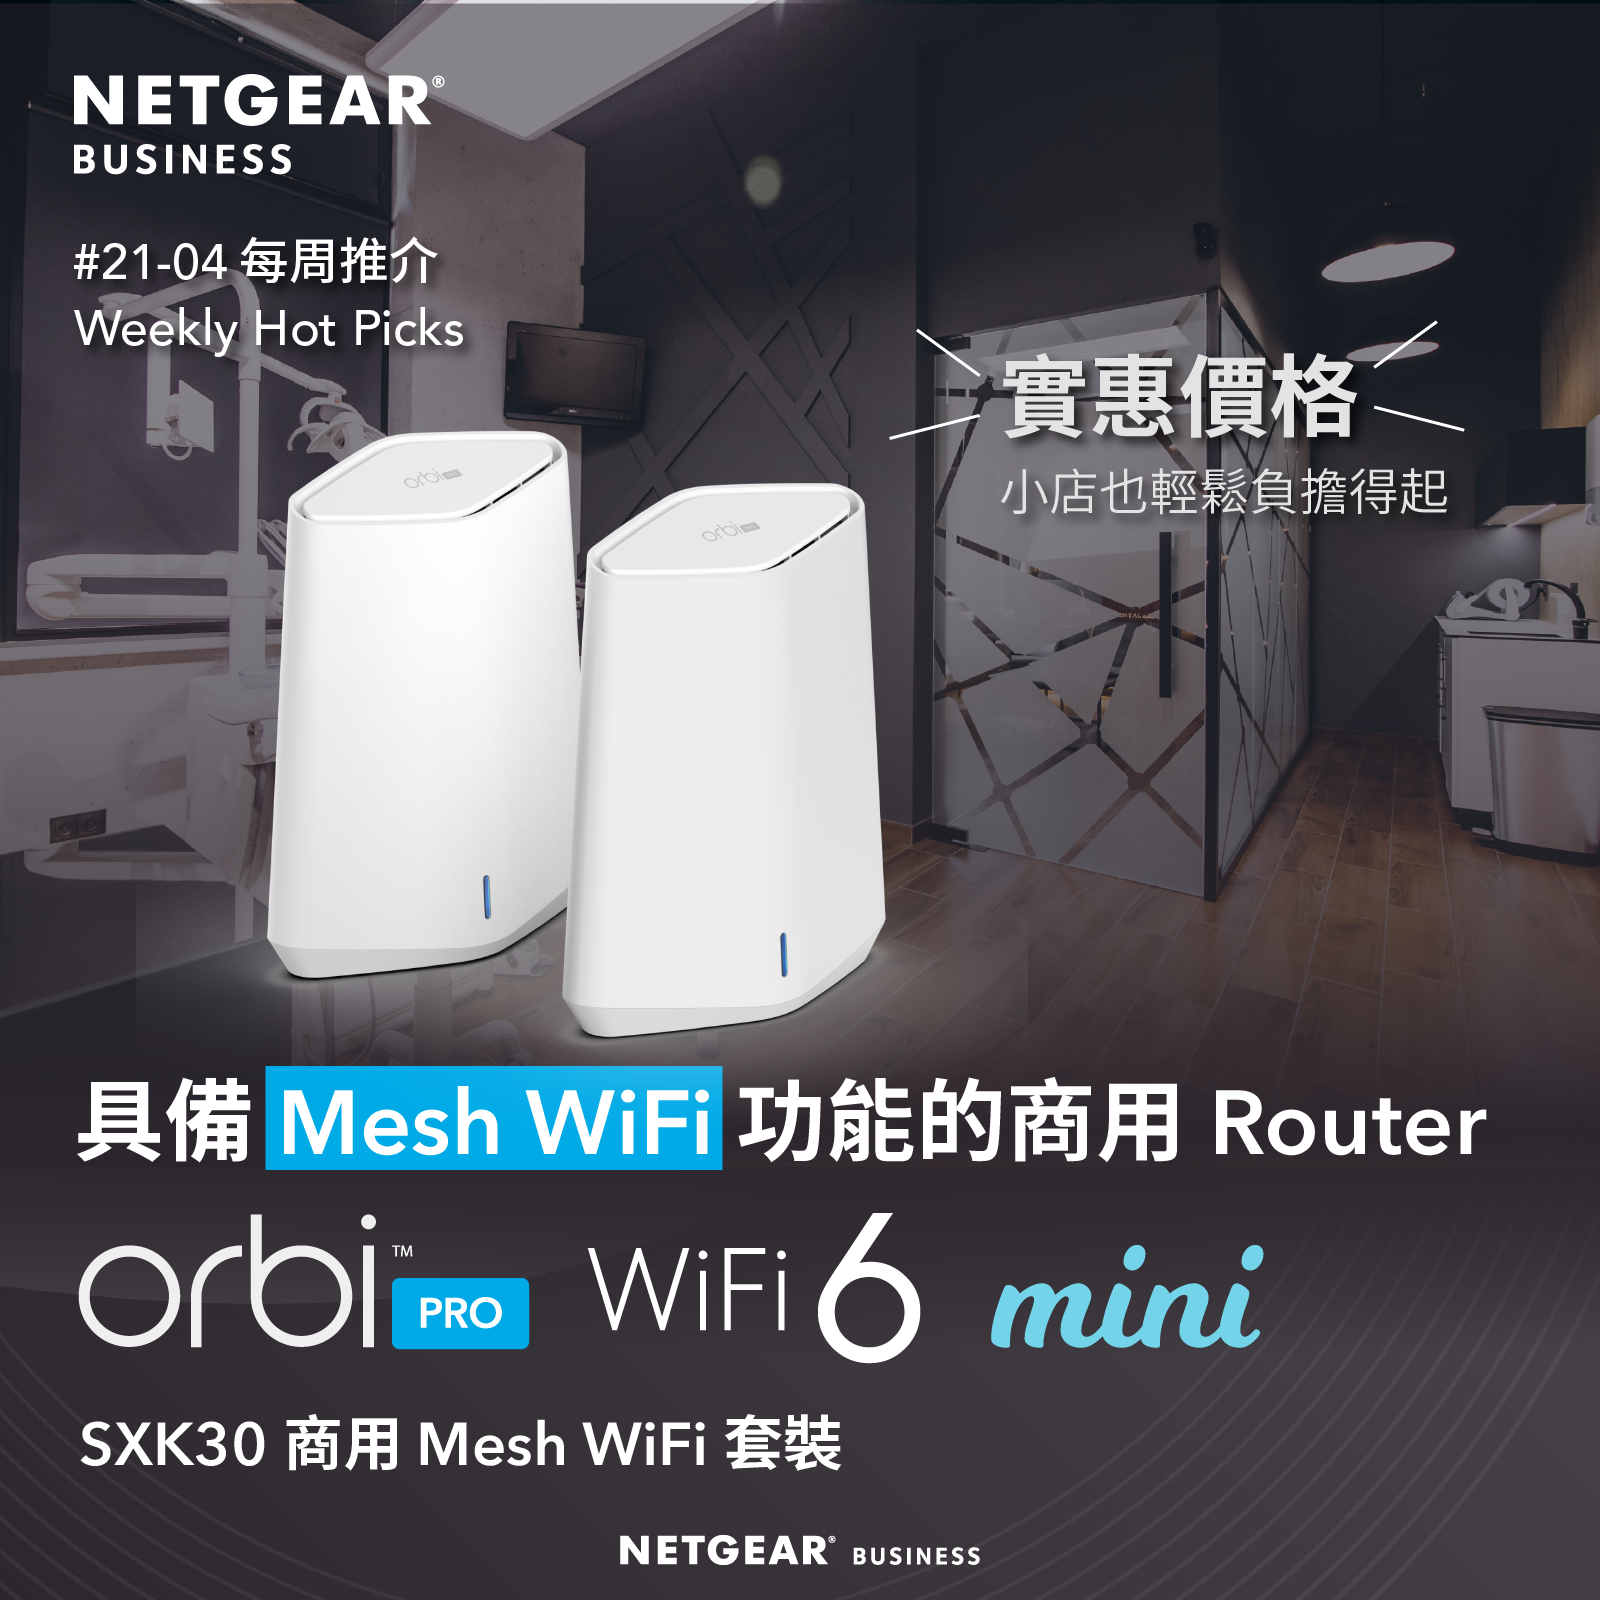 <b>Issue 21-04</b><br>具備 Mesh WiFi 功能的商用 Router <br> Orbi Pro WiFi 6 mini SXK30 商用 Mesh WiFi 套裝